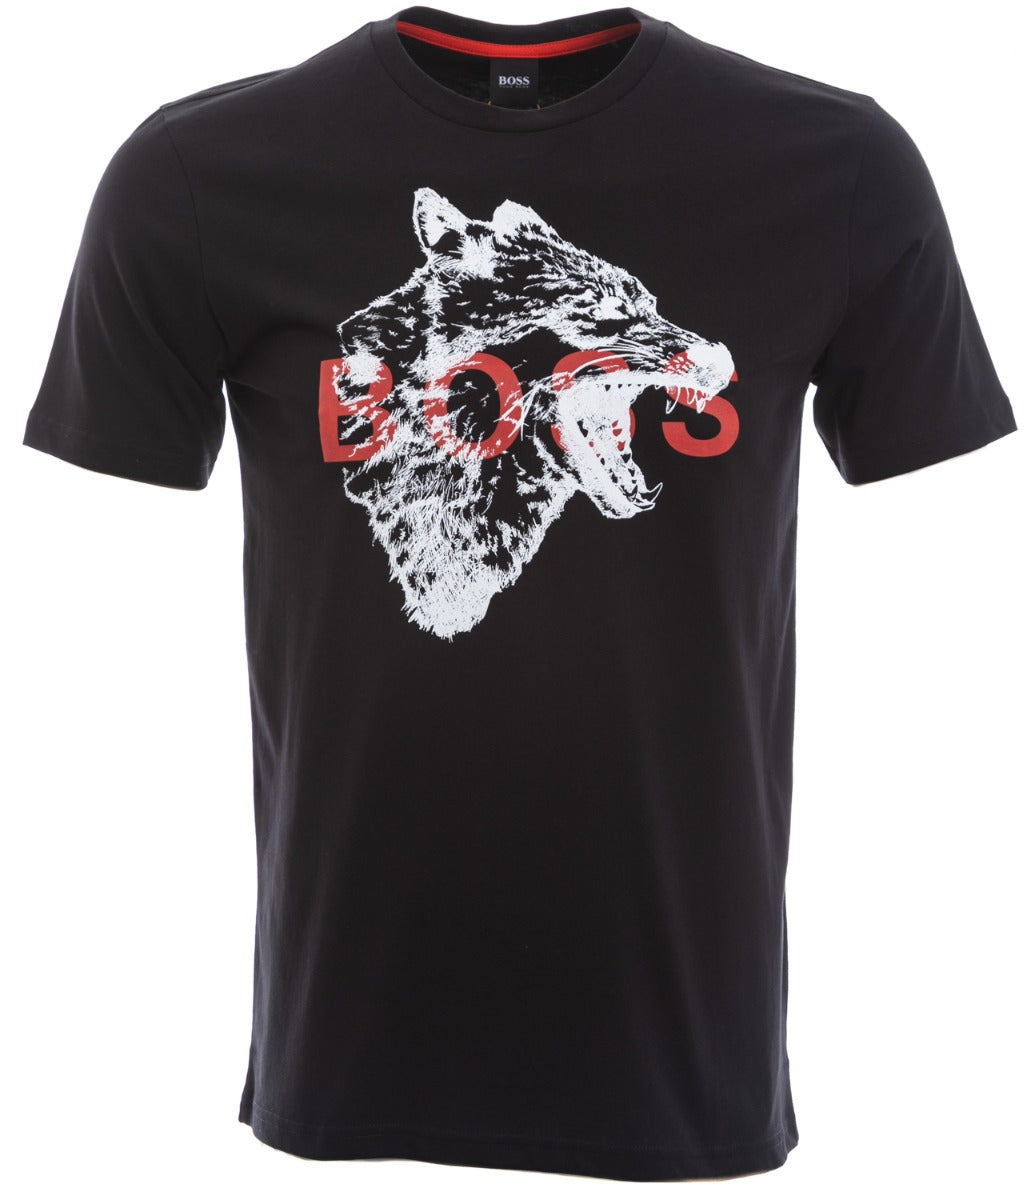 BOSS Tdraw T-Shirt in Black Wolf 